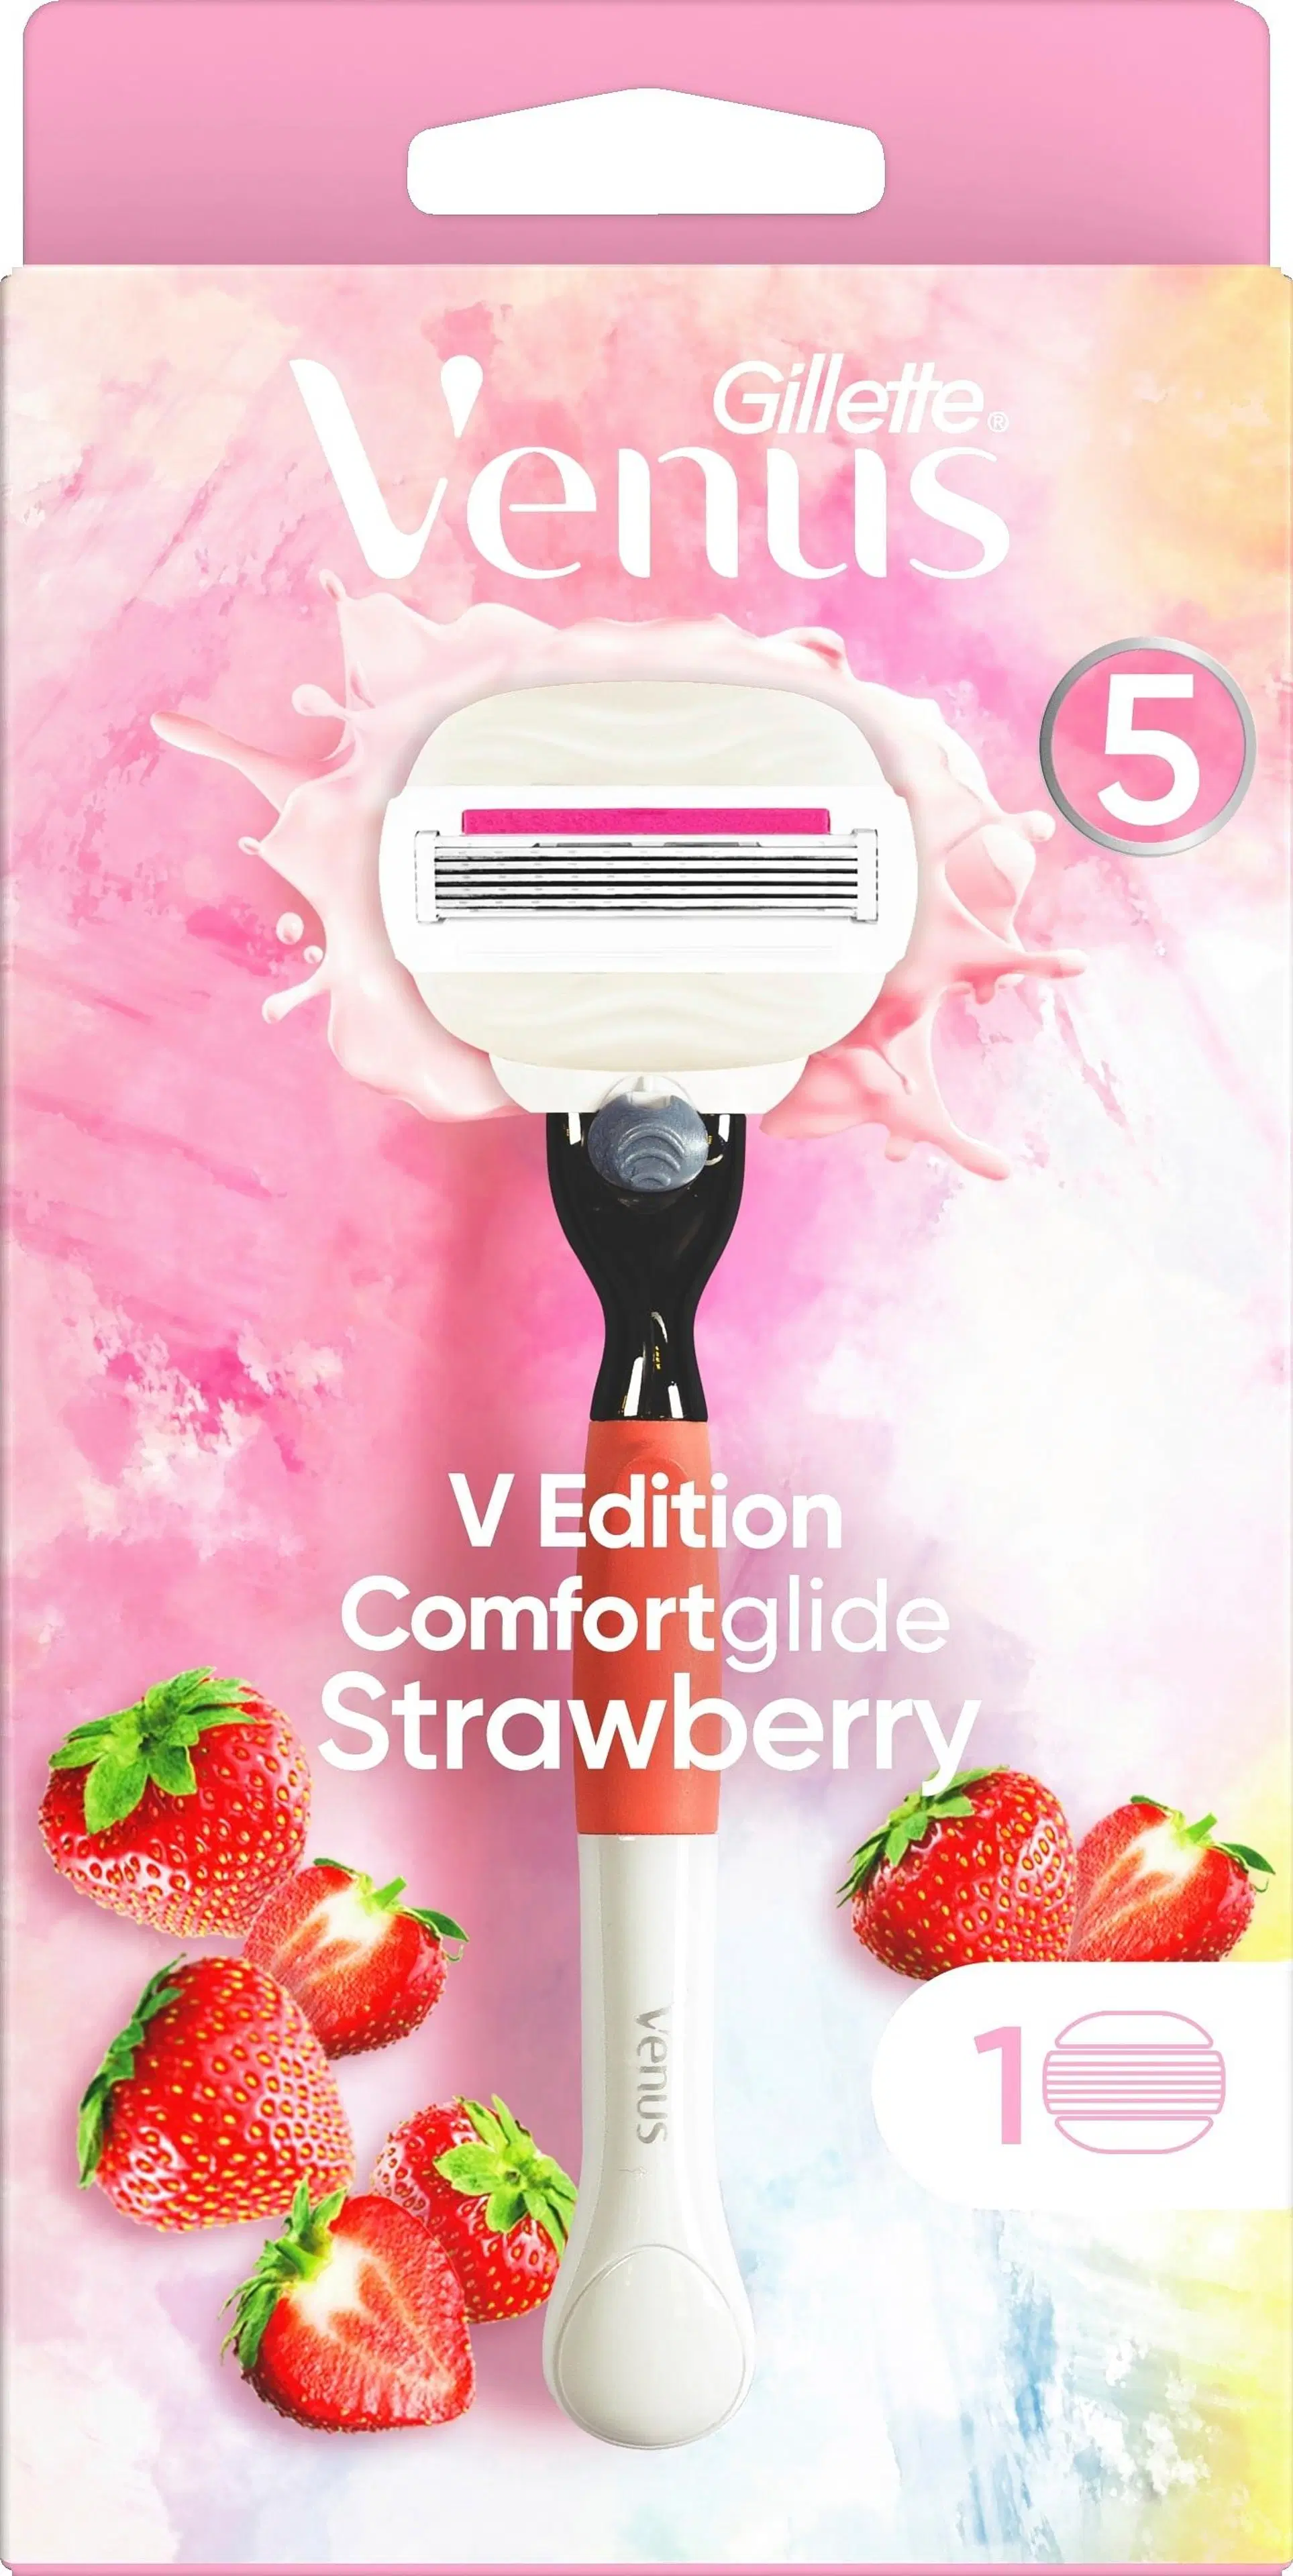 Gillette Venus Comfortglide Strawberry ihokarvanajohöylä